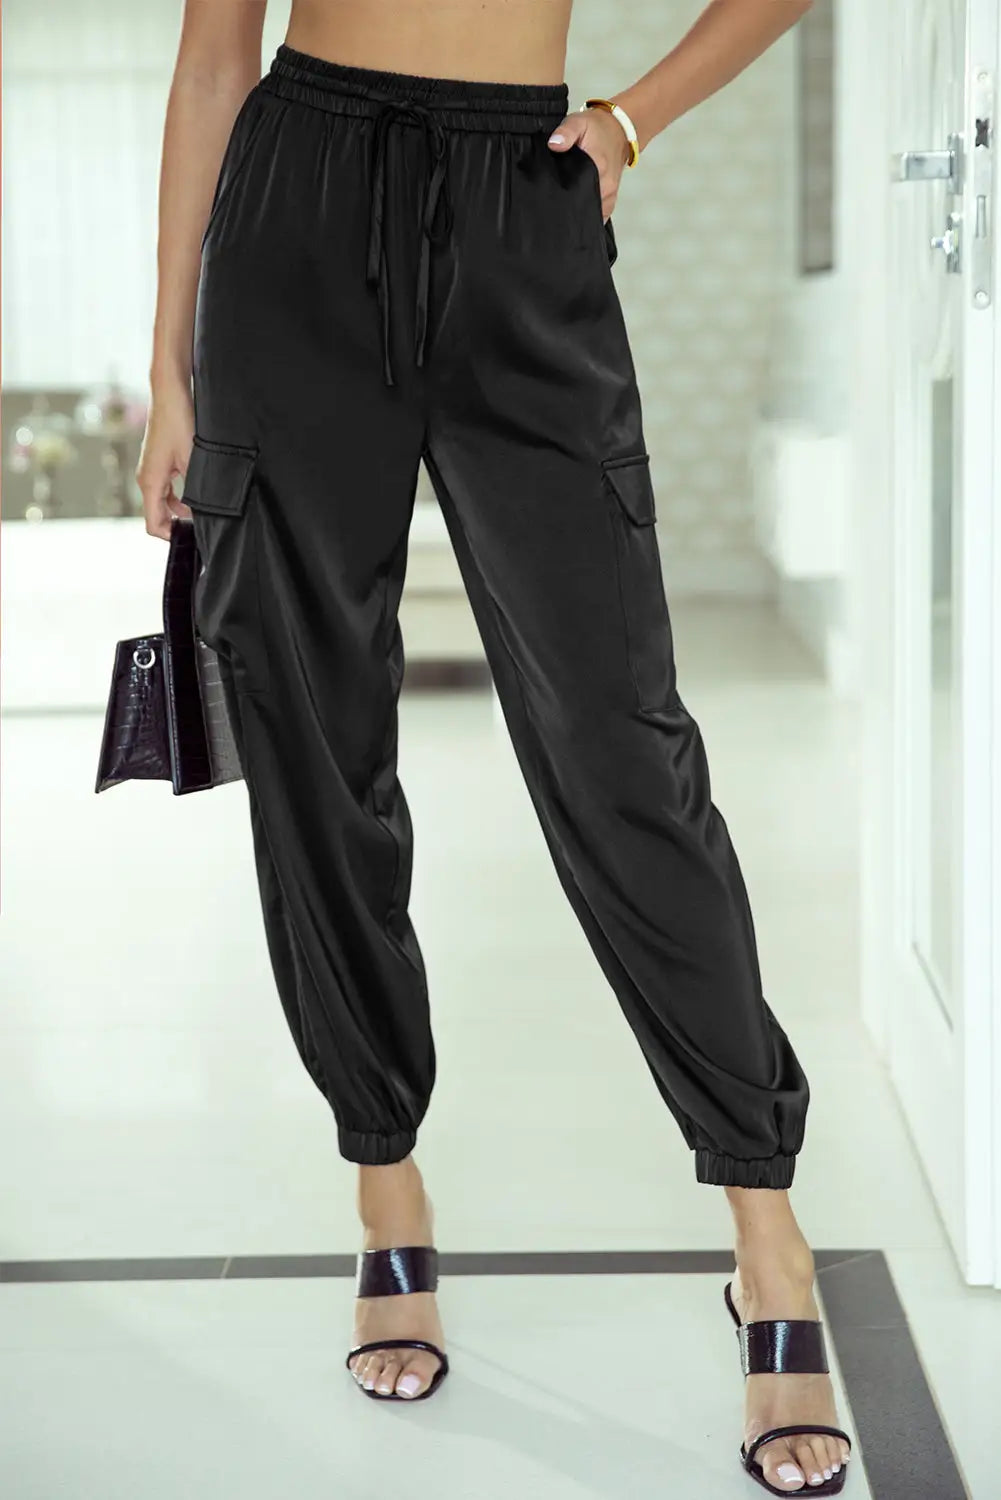 Black satin pocketed drawstring elastic waist pants - s / 90% polyester + 10% elastane - cargo